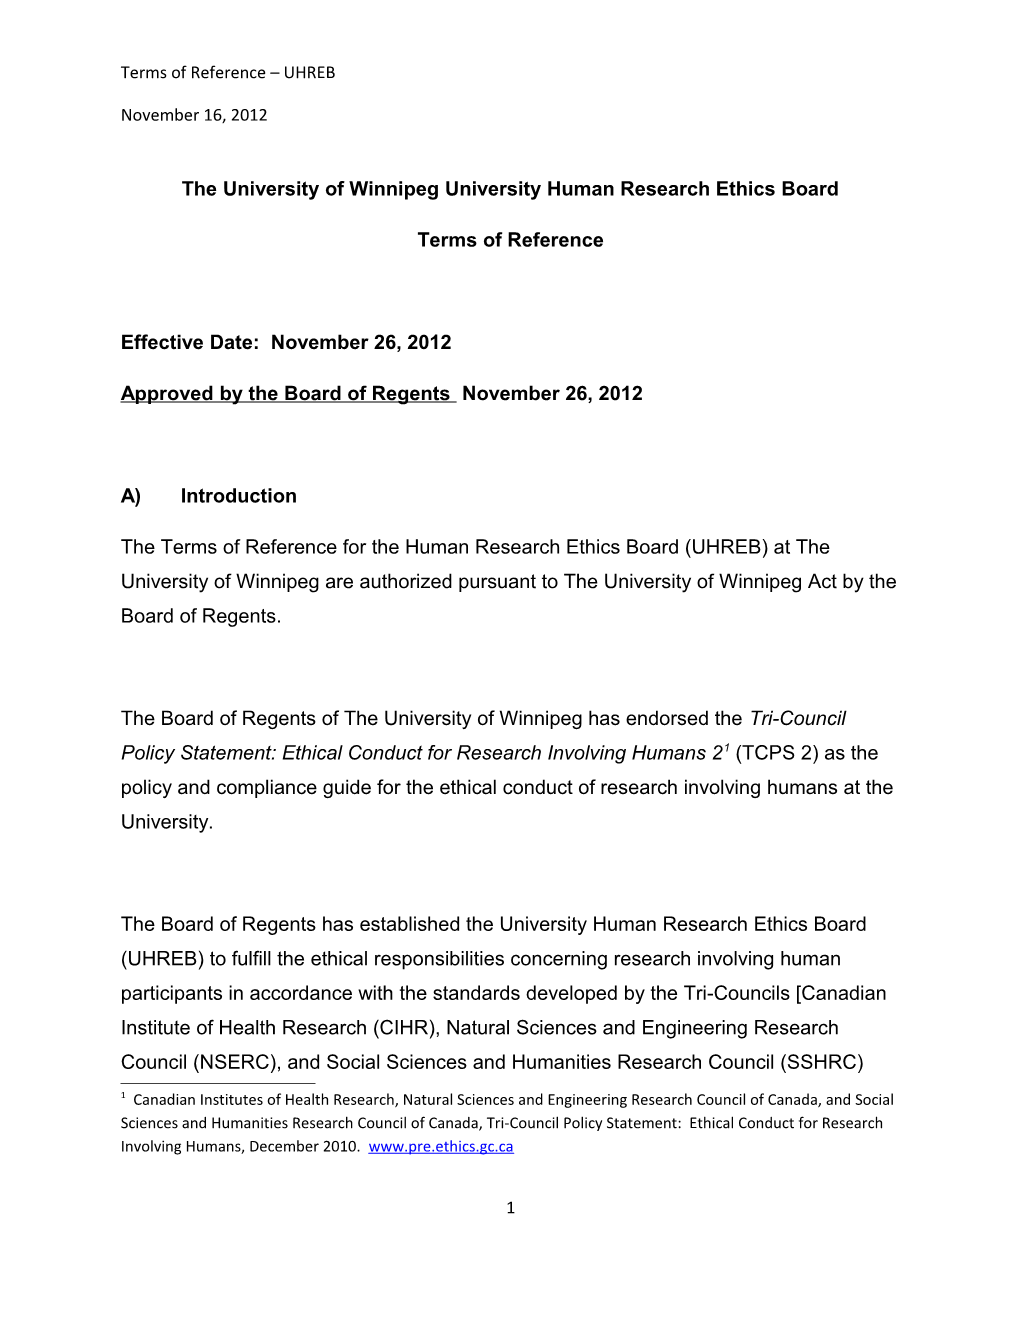 The University of Winnipeg University Human Research Ethics Board